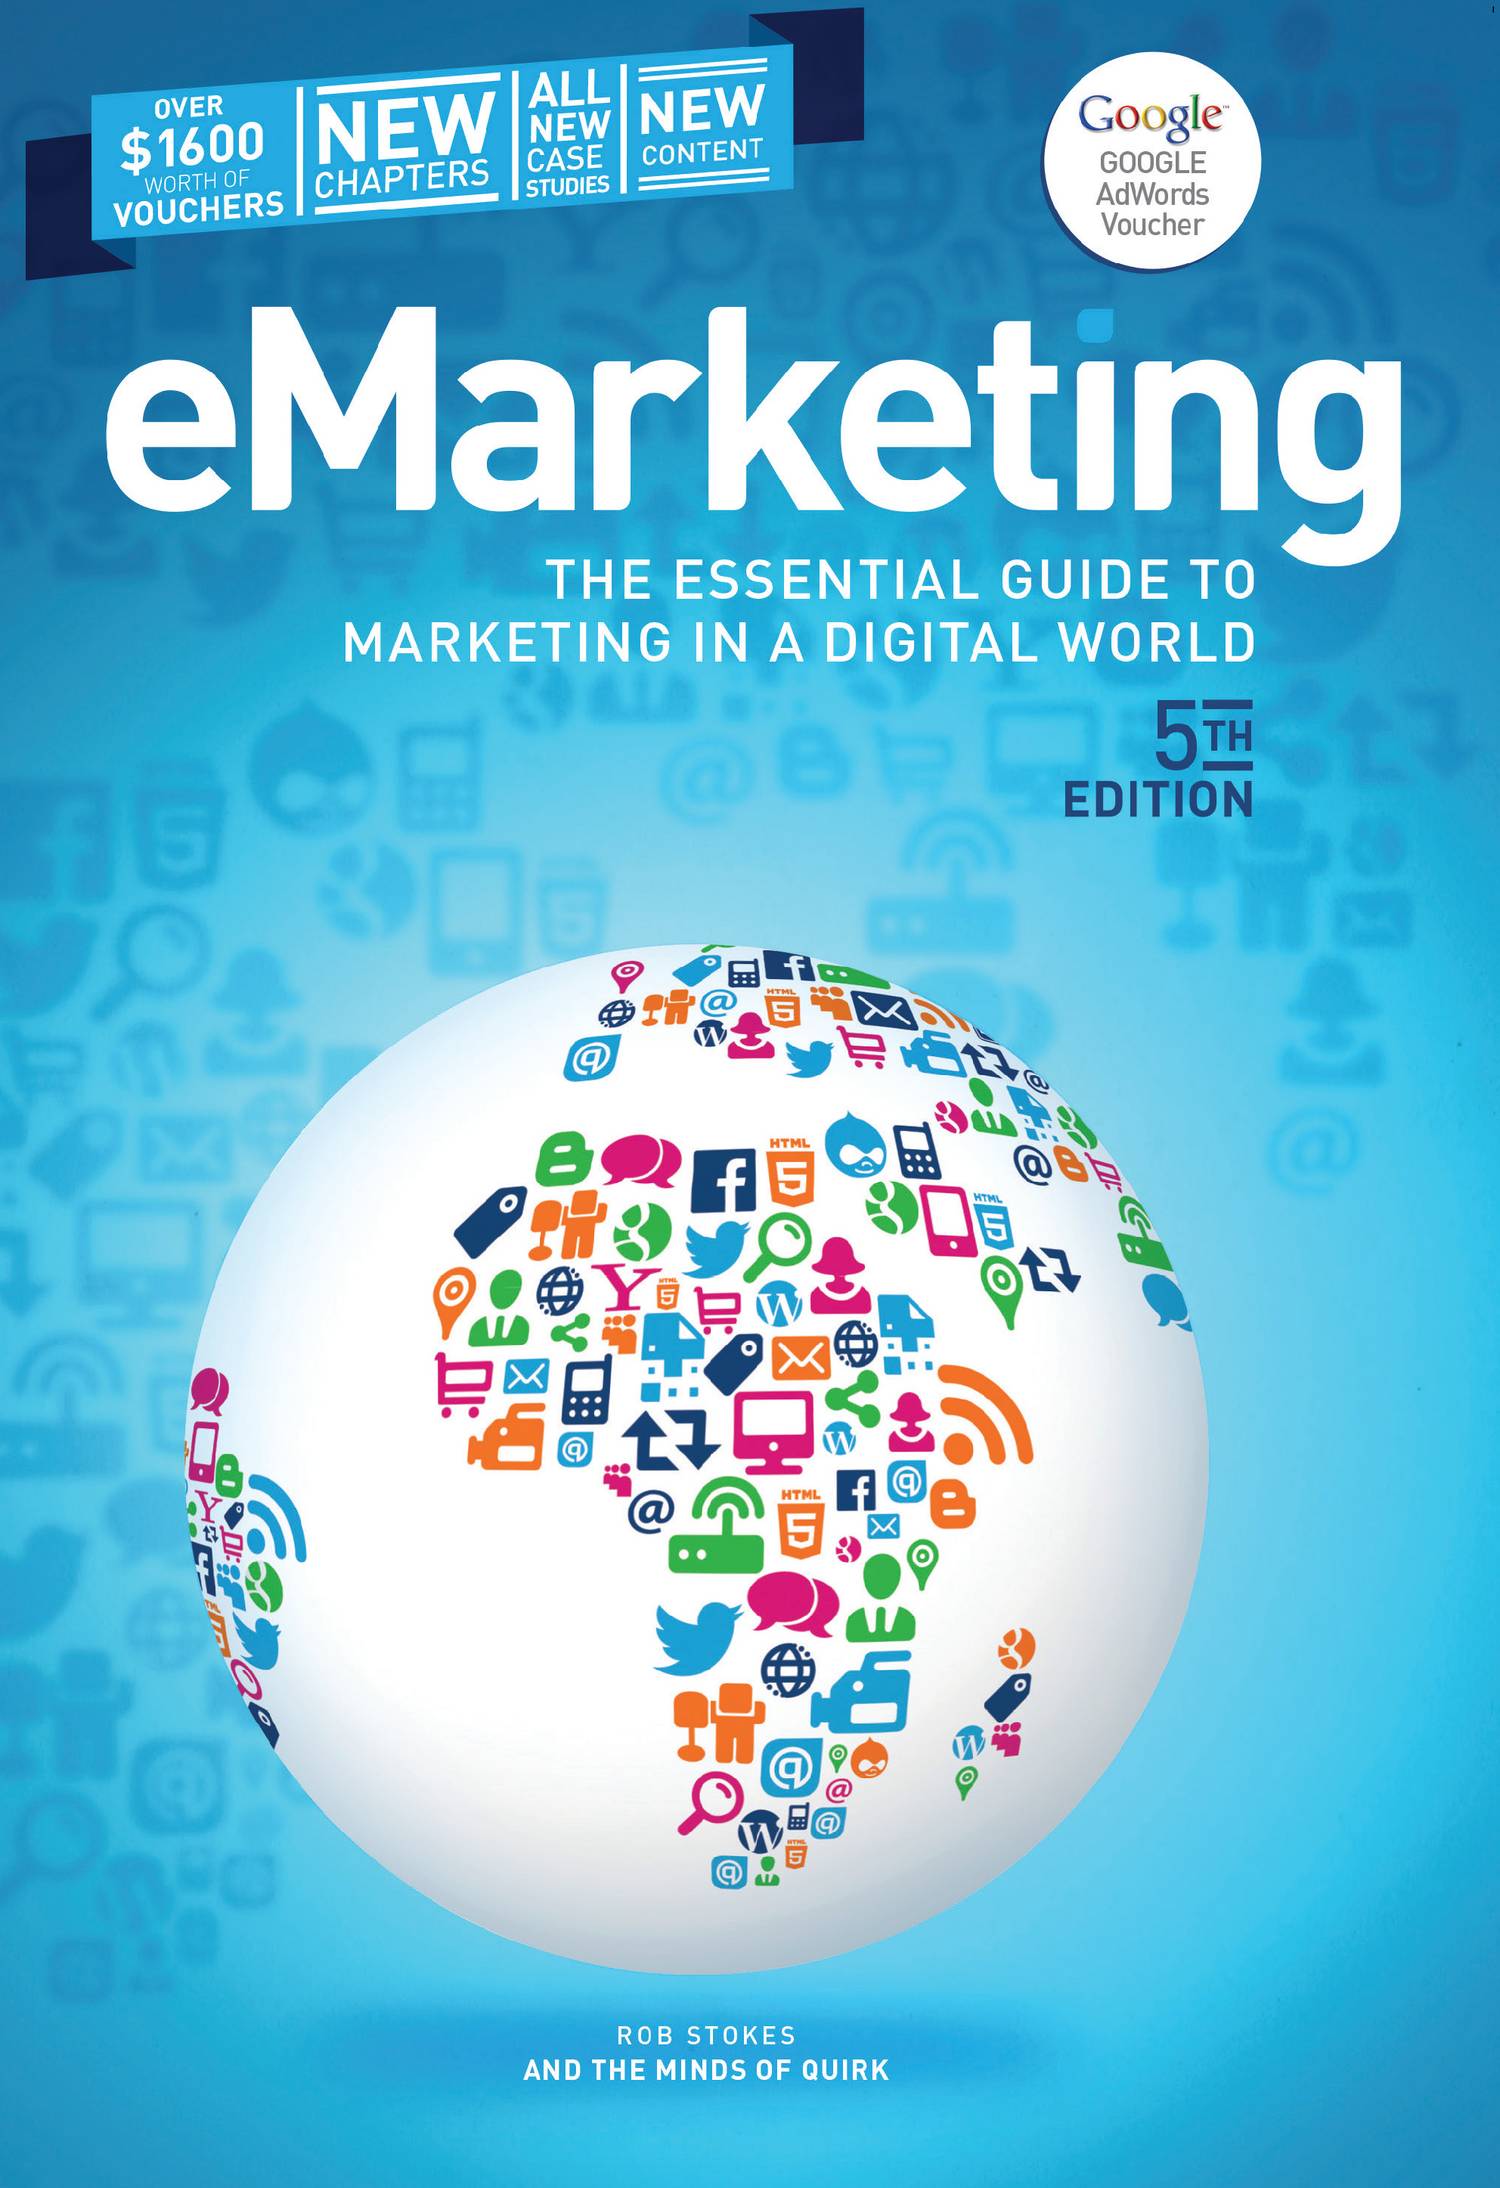 E-Marketing Textbook.pdf | DocDroid